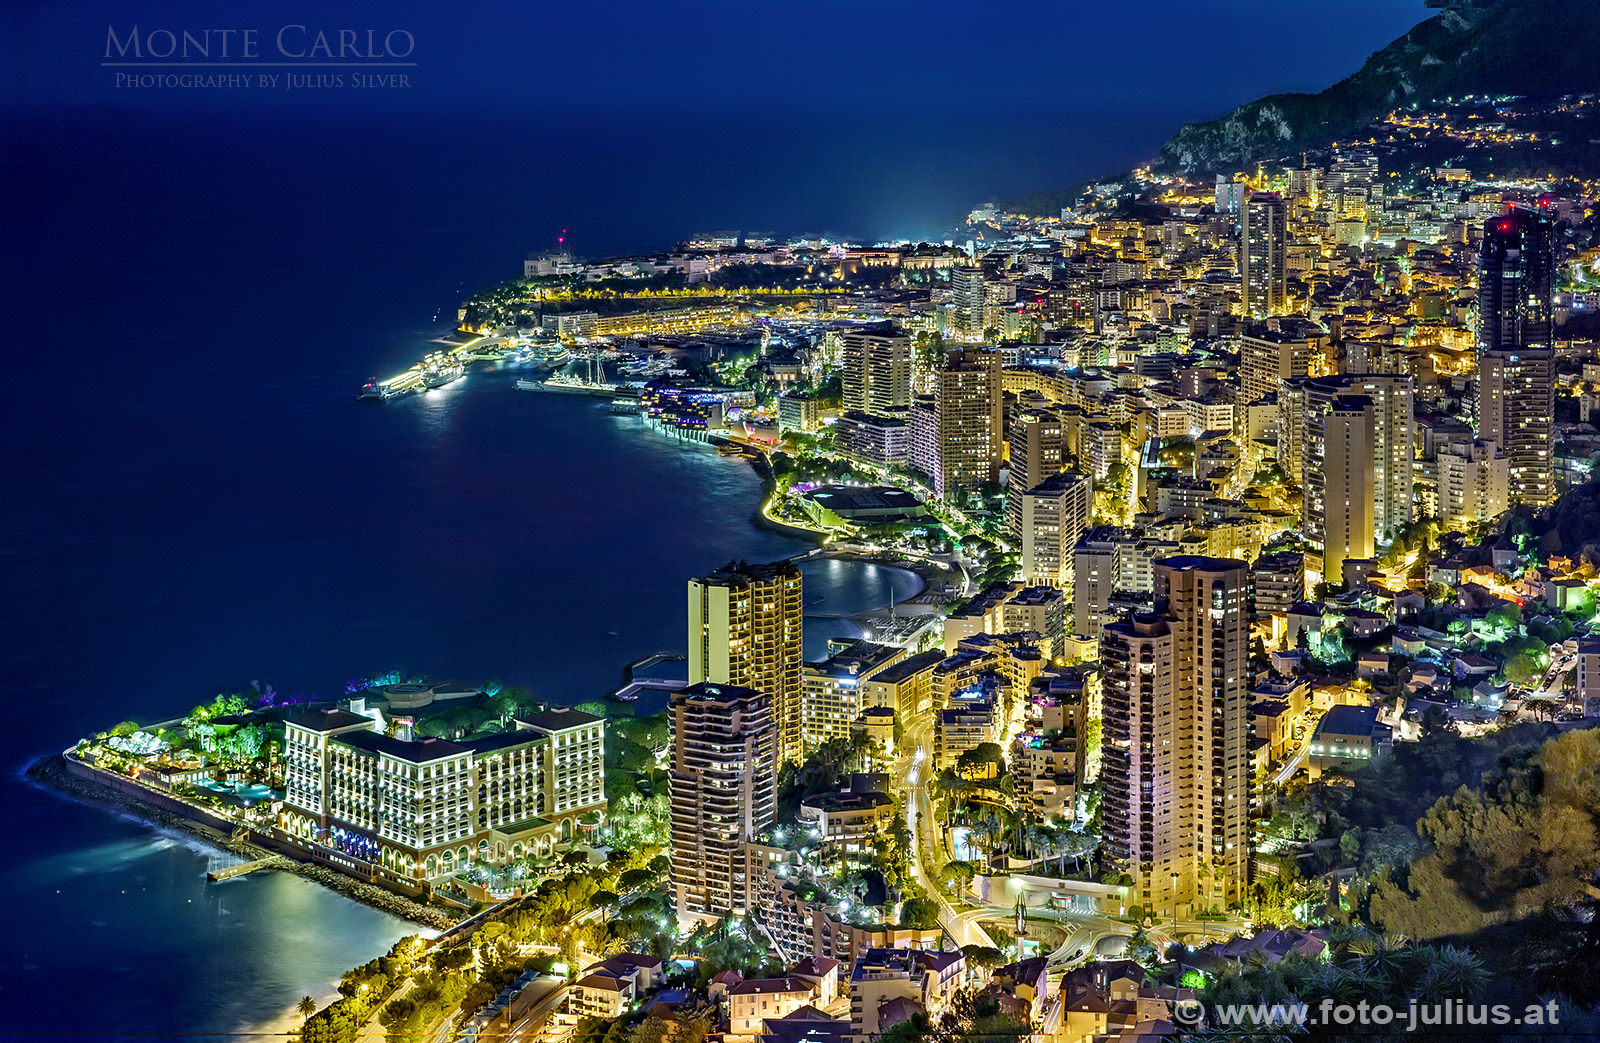 Monte_Carlo_006a.jpg, 767kB